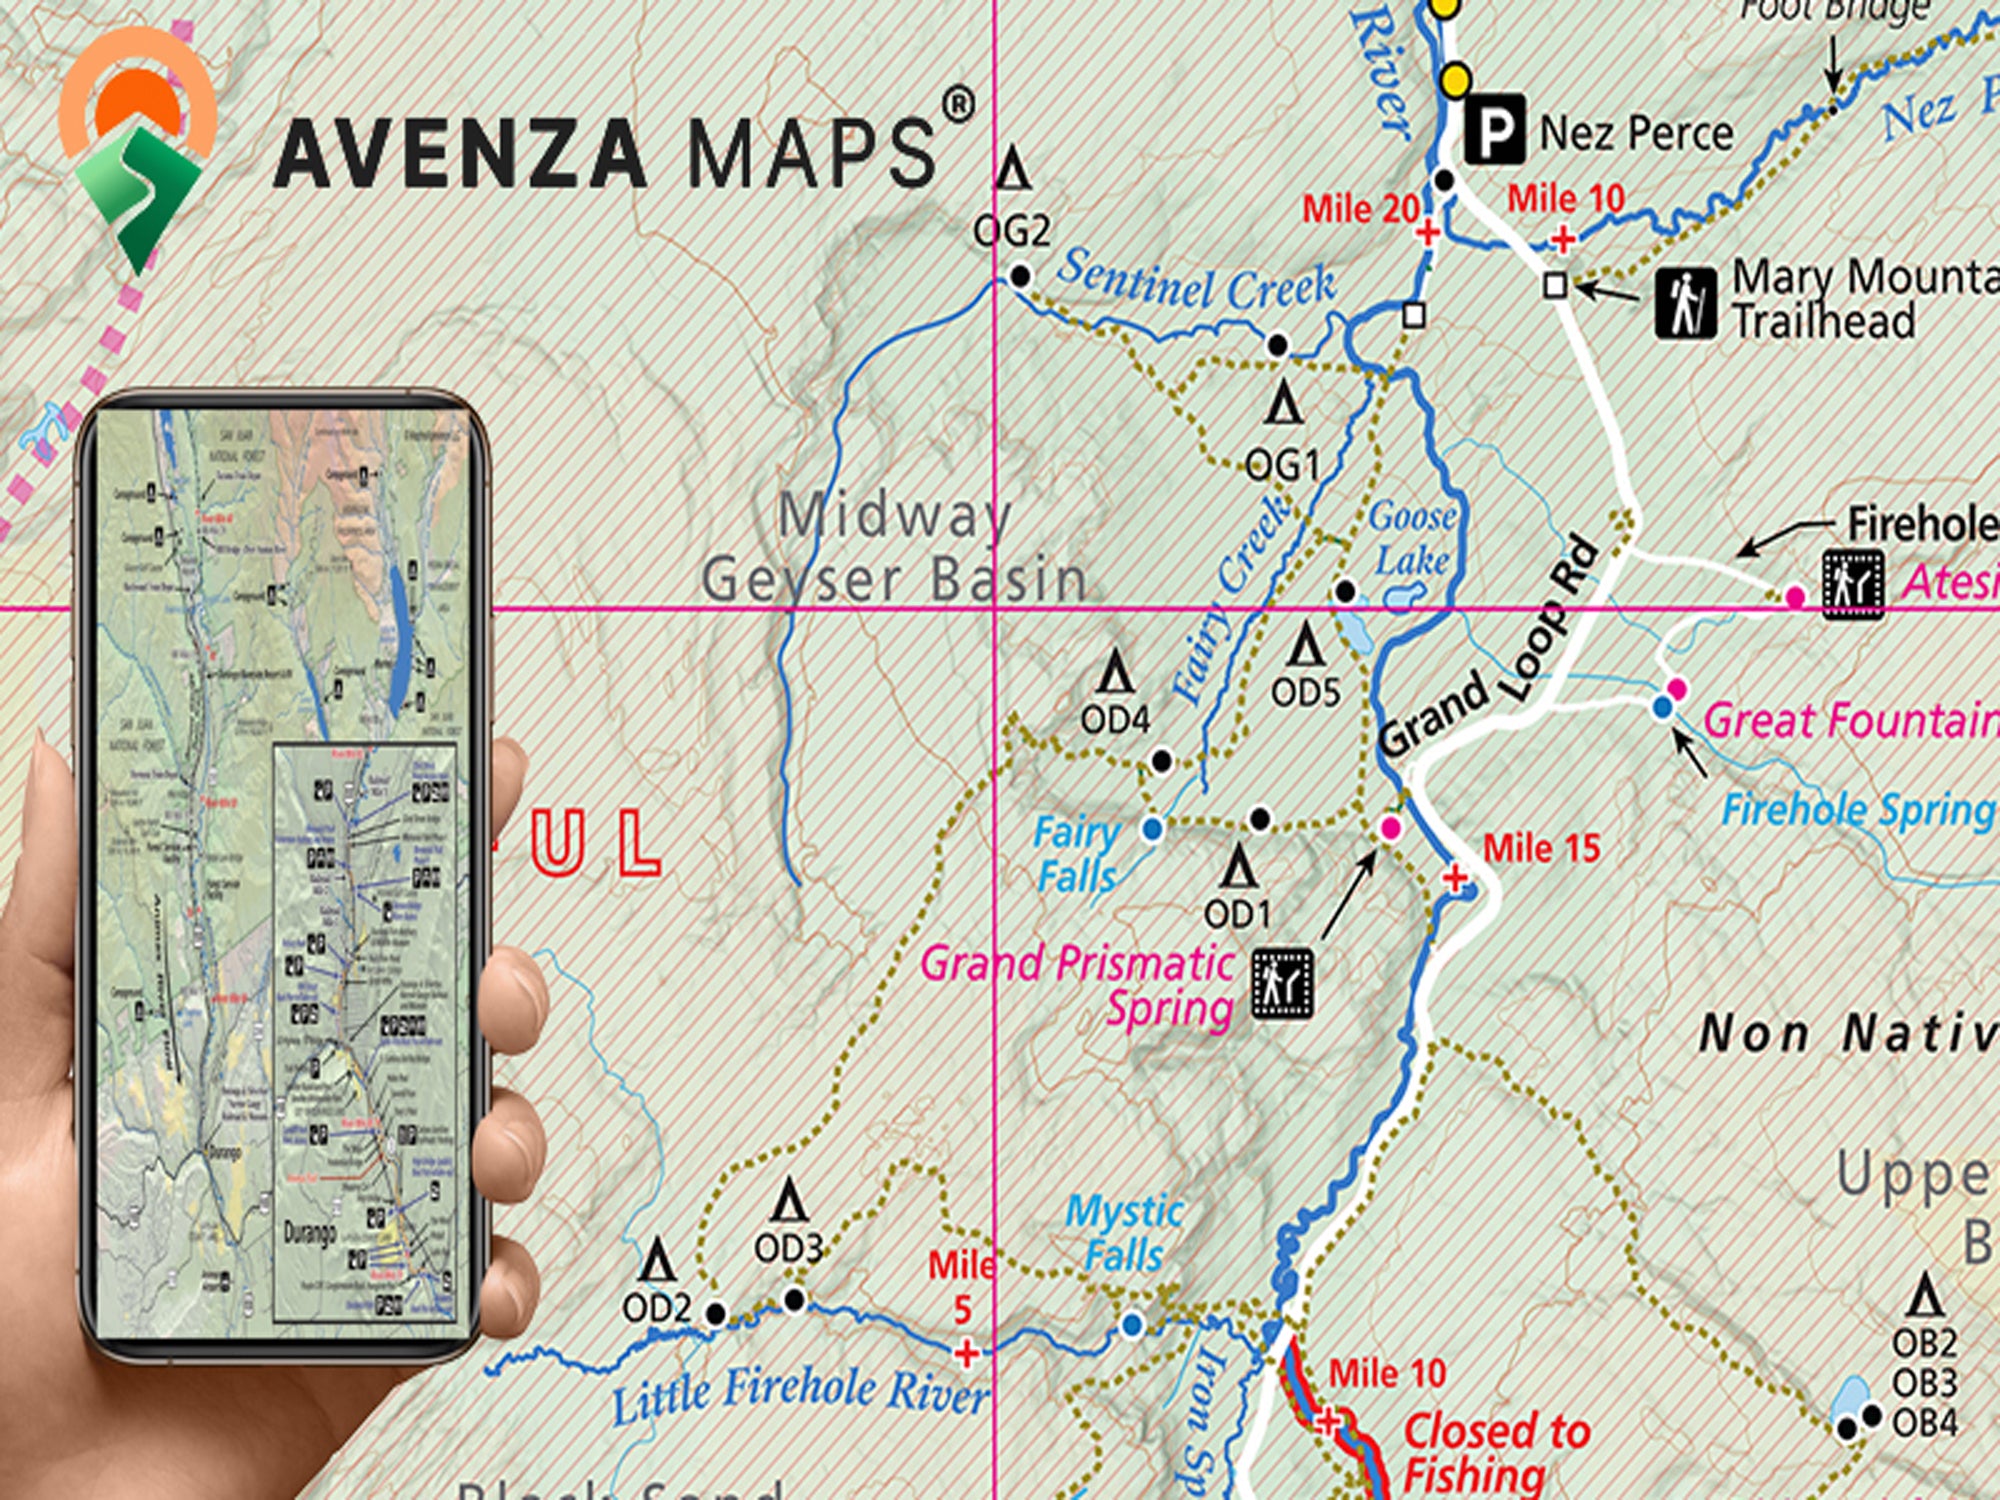 Big Hole River, Montana Pocket Fishing Map